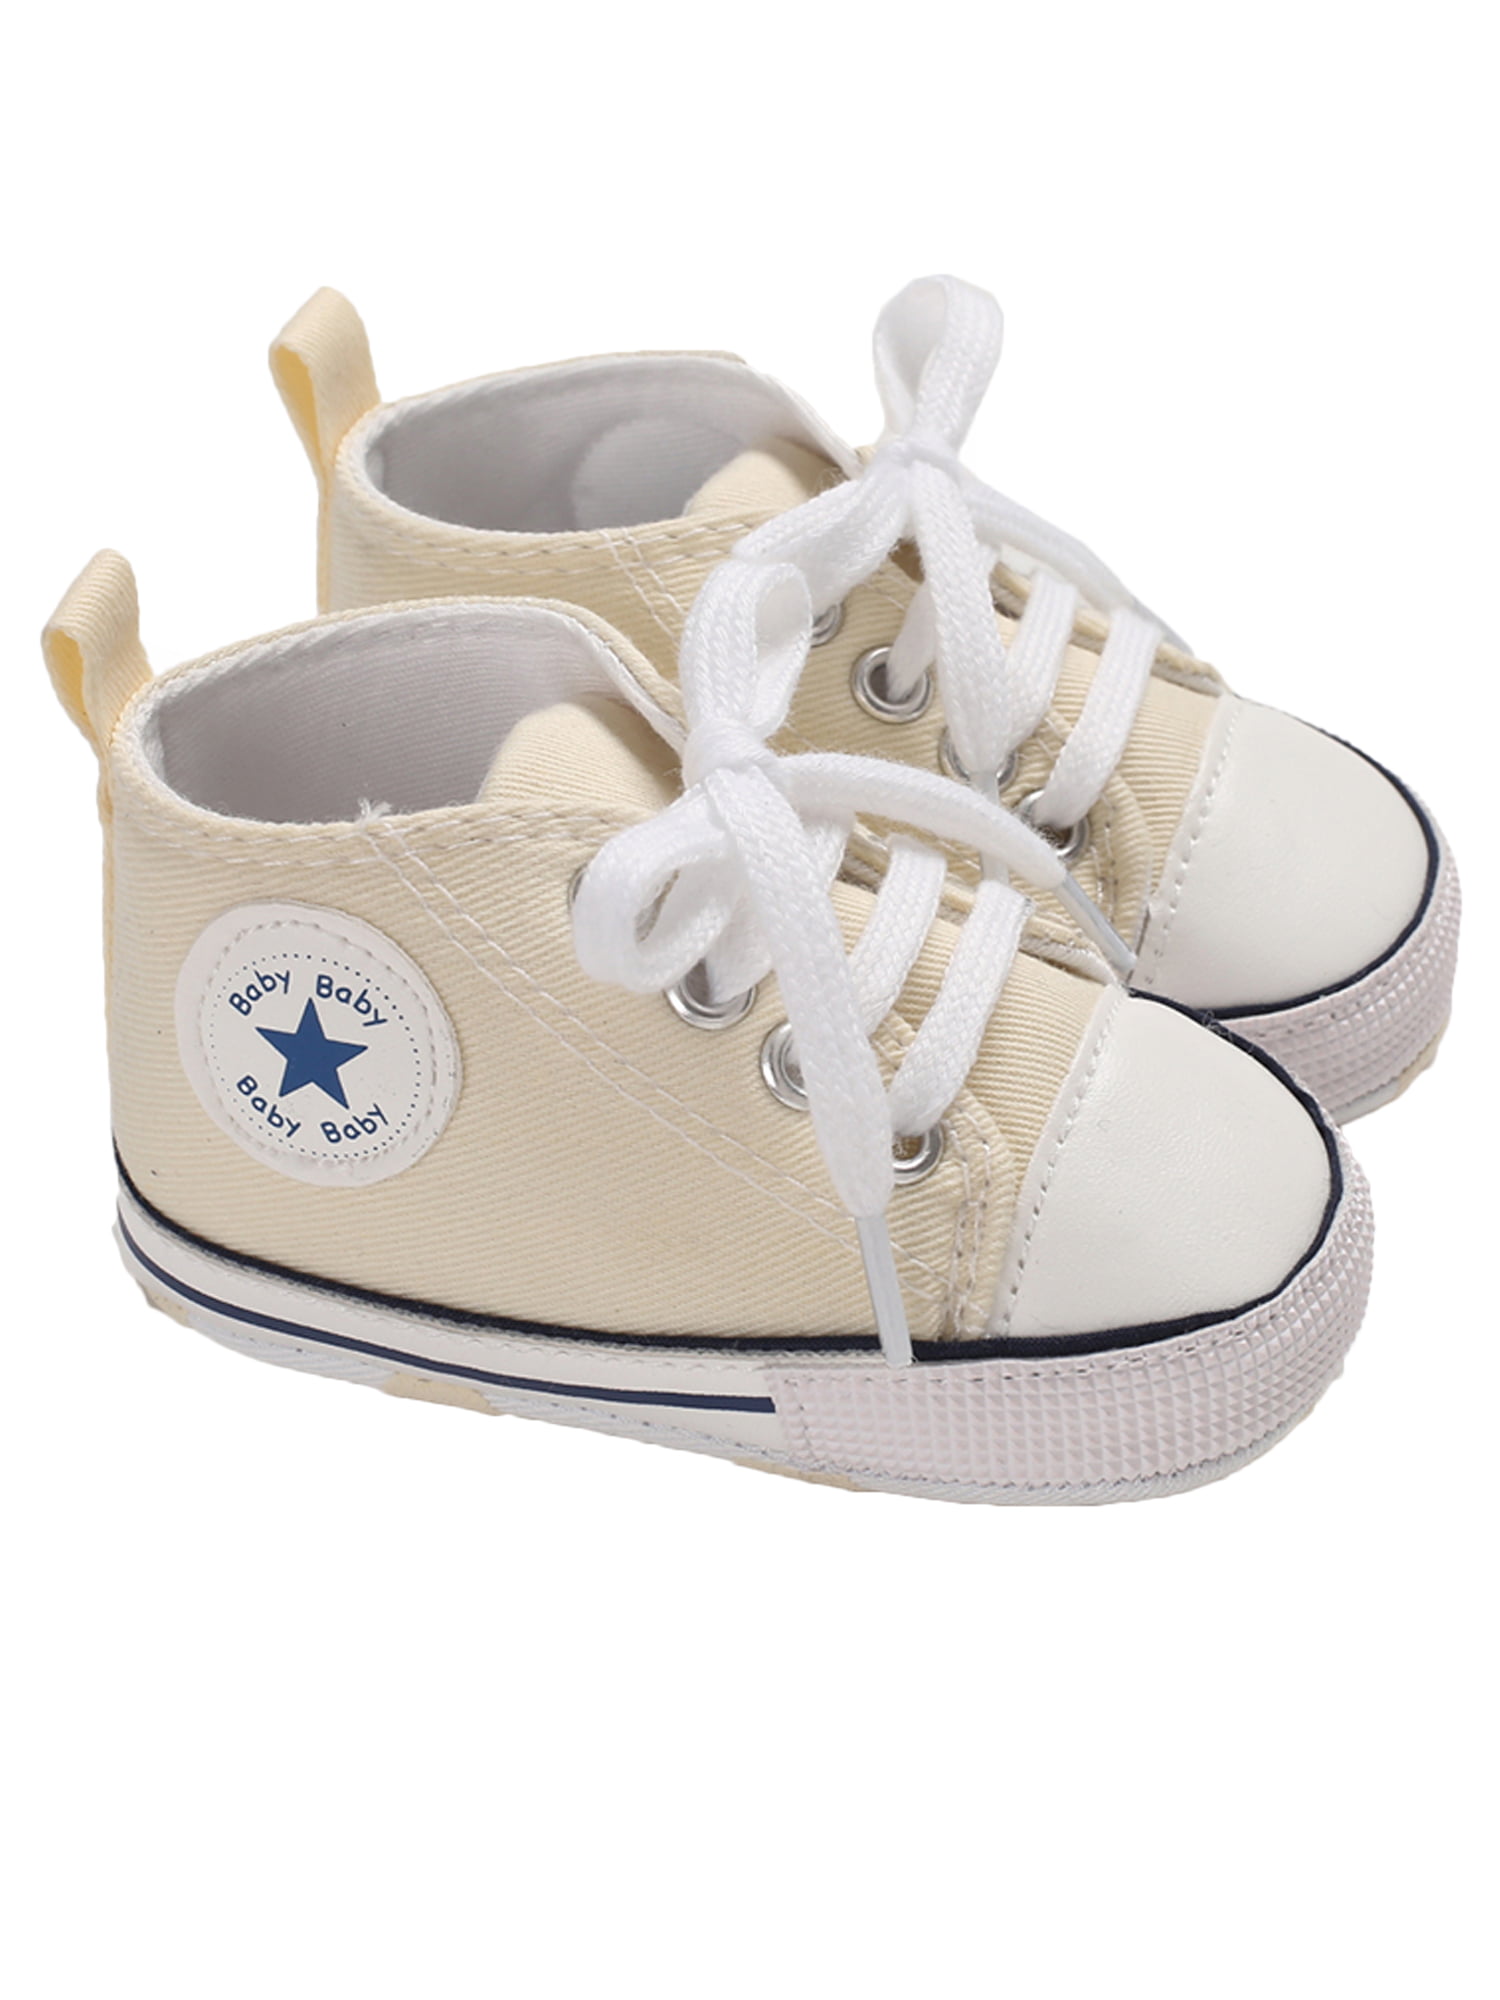 Newborn Baby Boys Girls Canvas Crib Shoes Soft Sole Prewalker Anti-slip Sneakers 